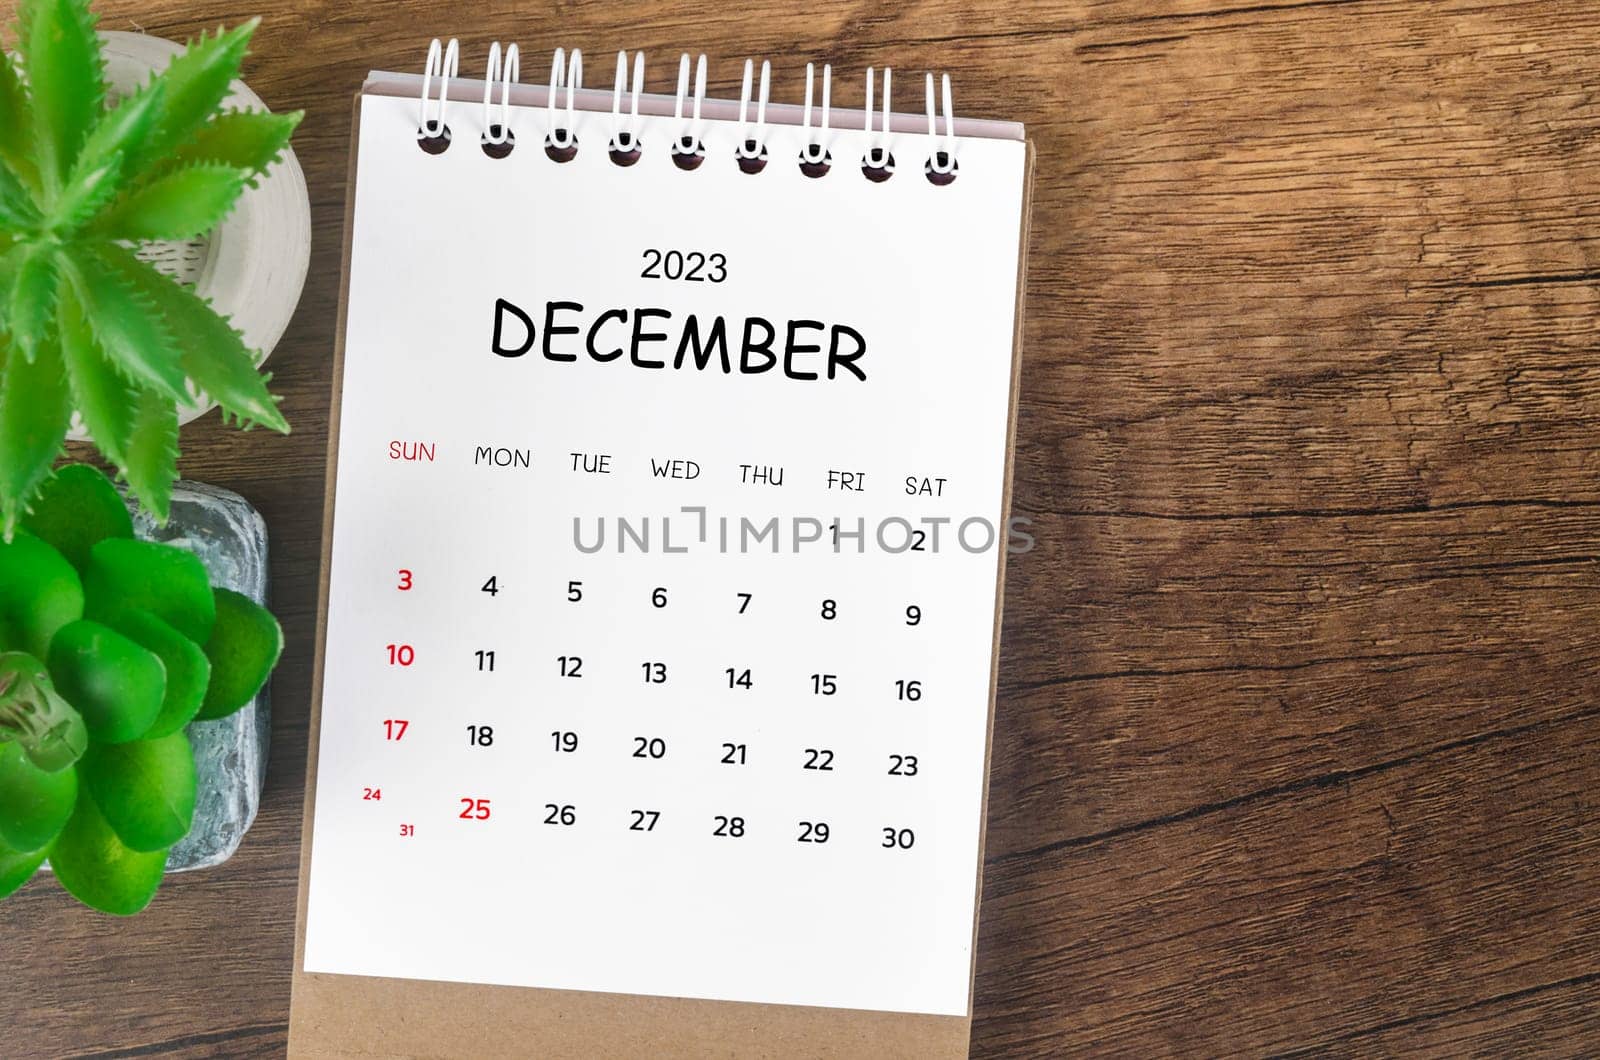 The December 2023 desk calendar for 2023 on wooden background. by Gamjai